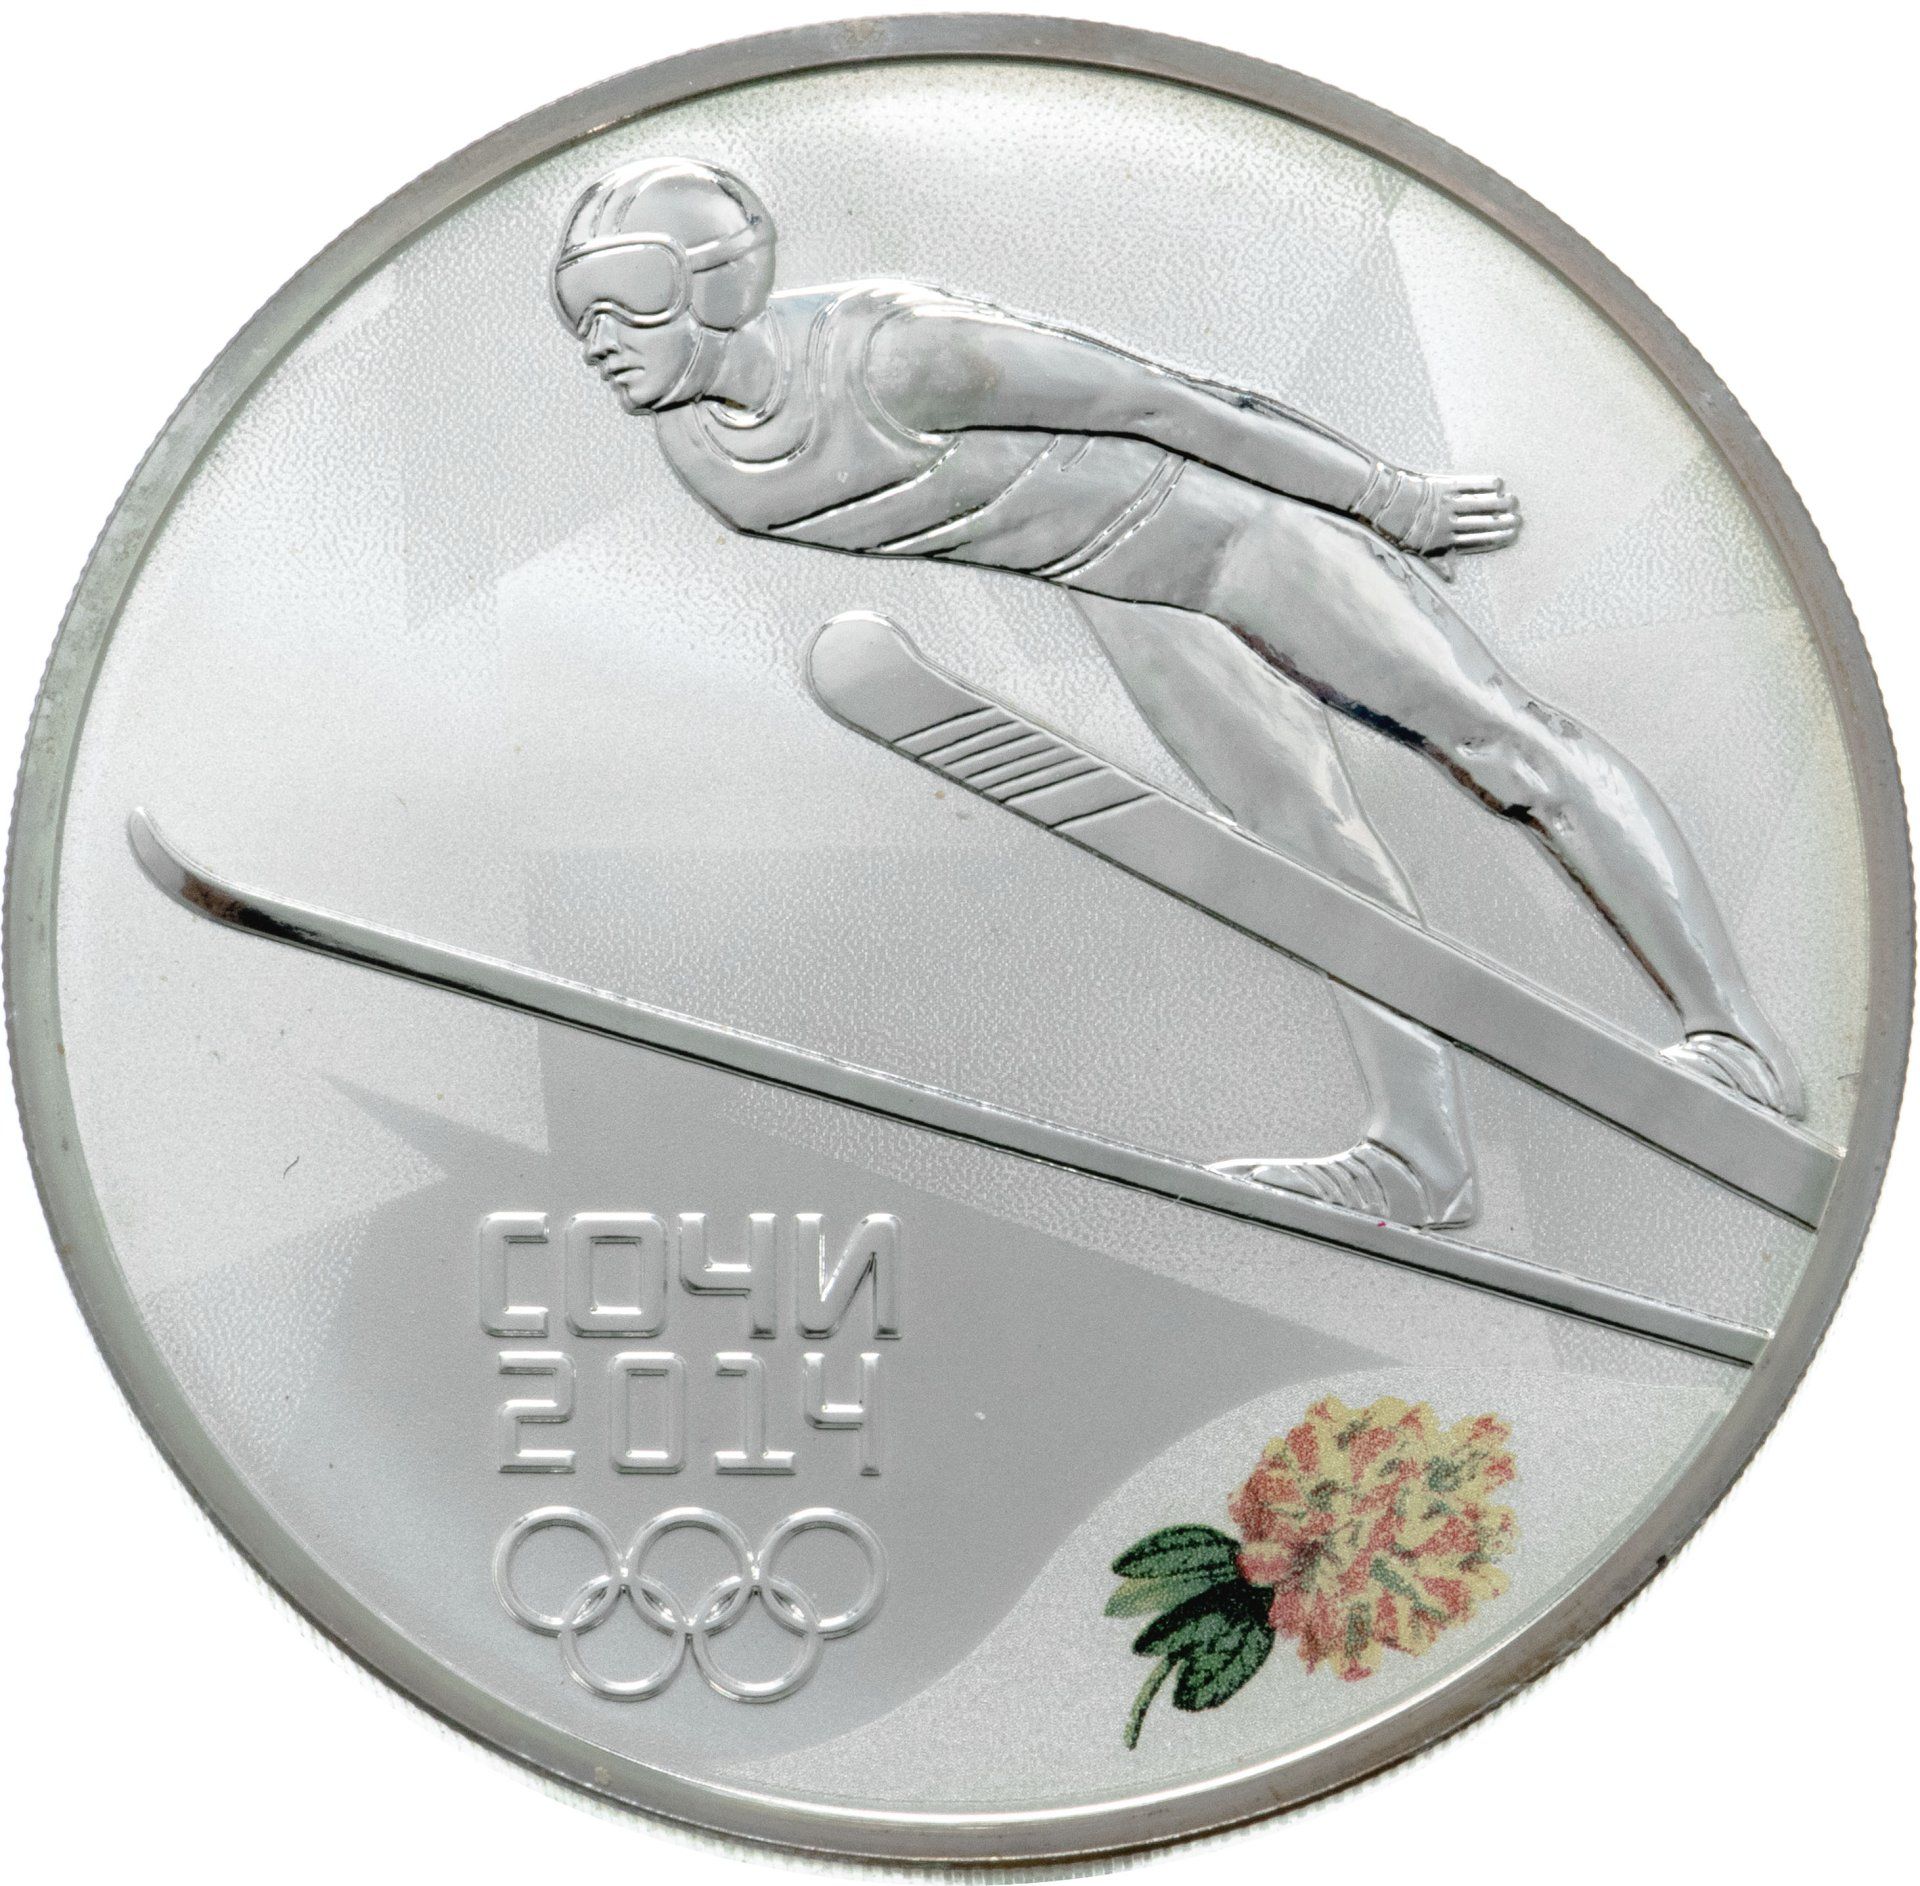 Монета 2014 г. Золотые монеты олимпиады Сочи. Сувенир в виде трамплина.